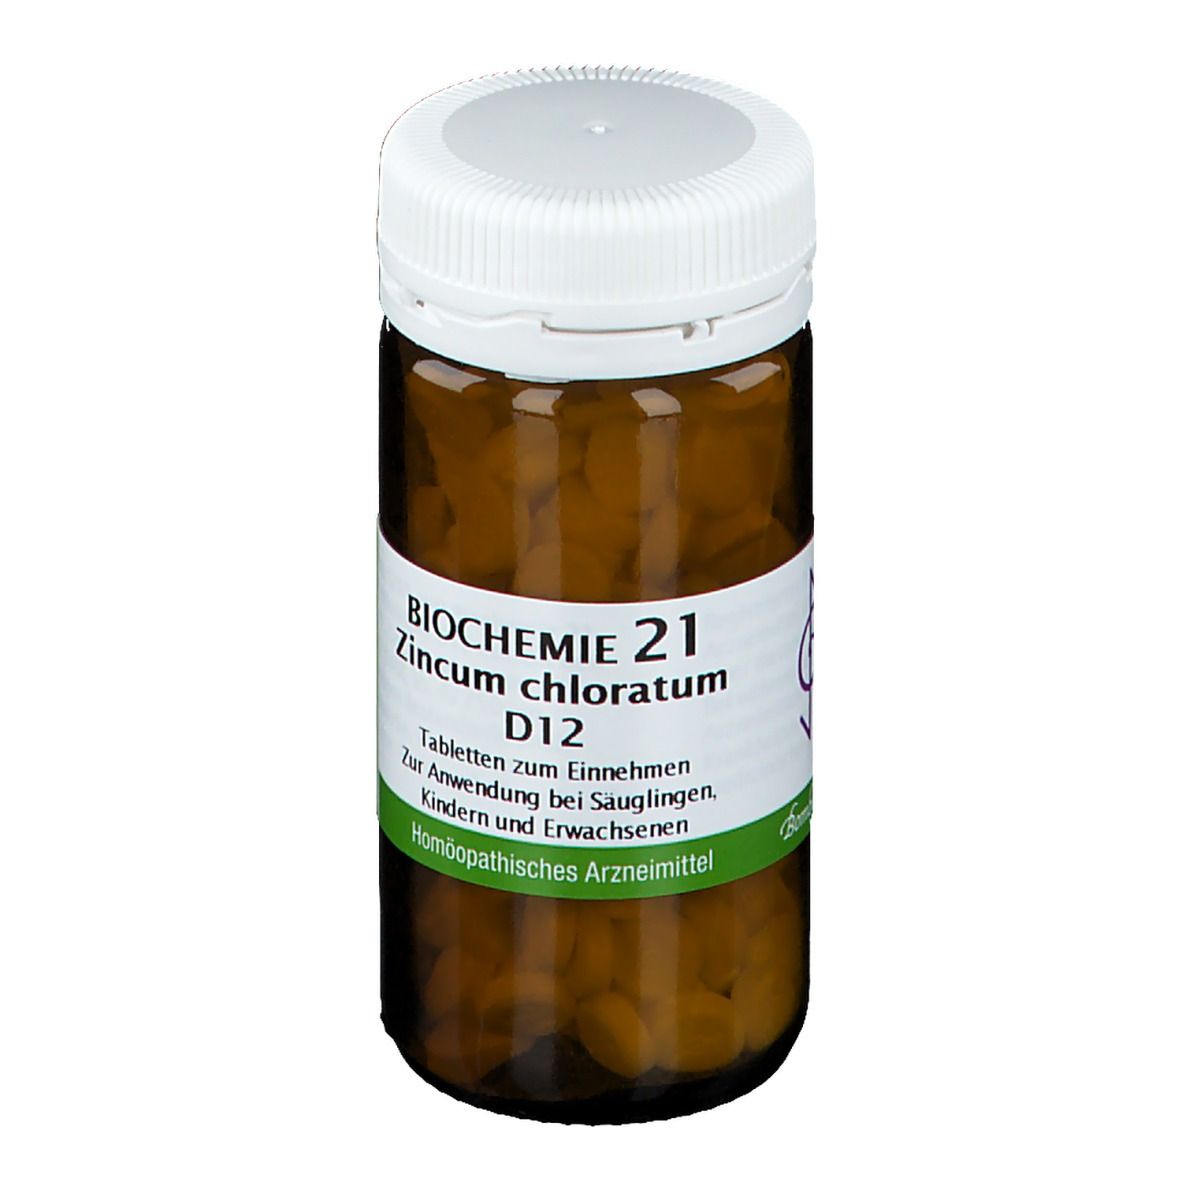 Bombastus Biochemie 21 Zincum chloratum D 12 Tabletten